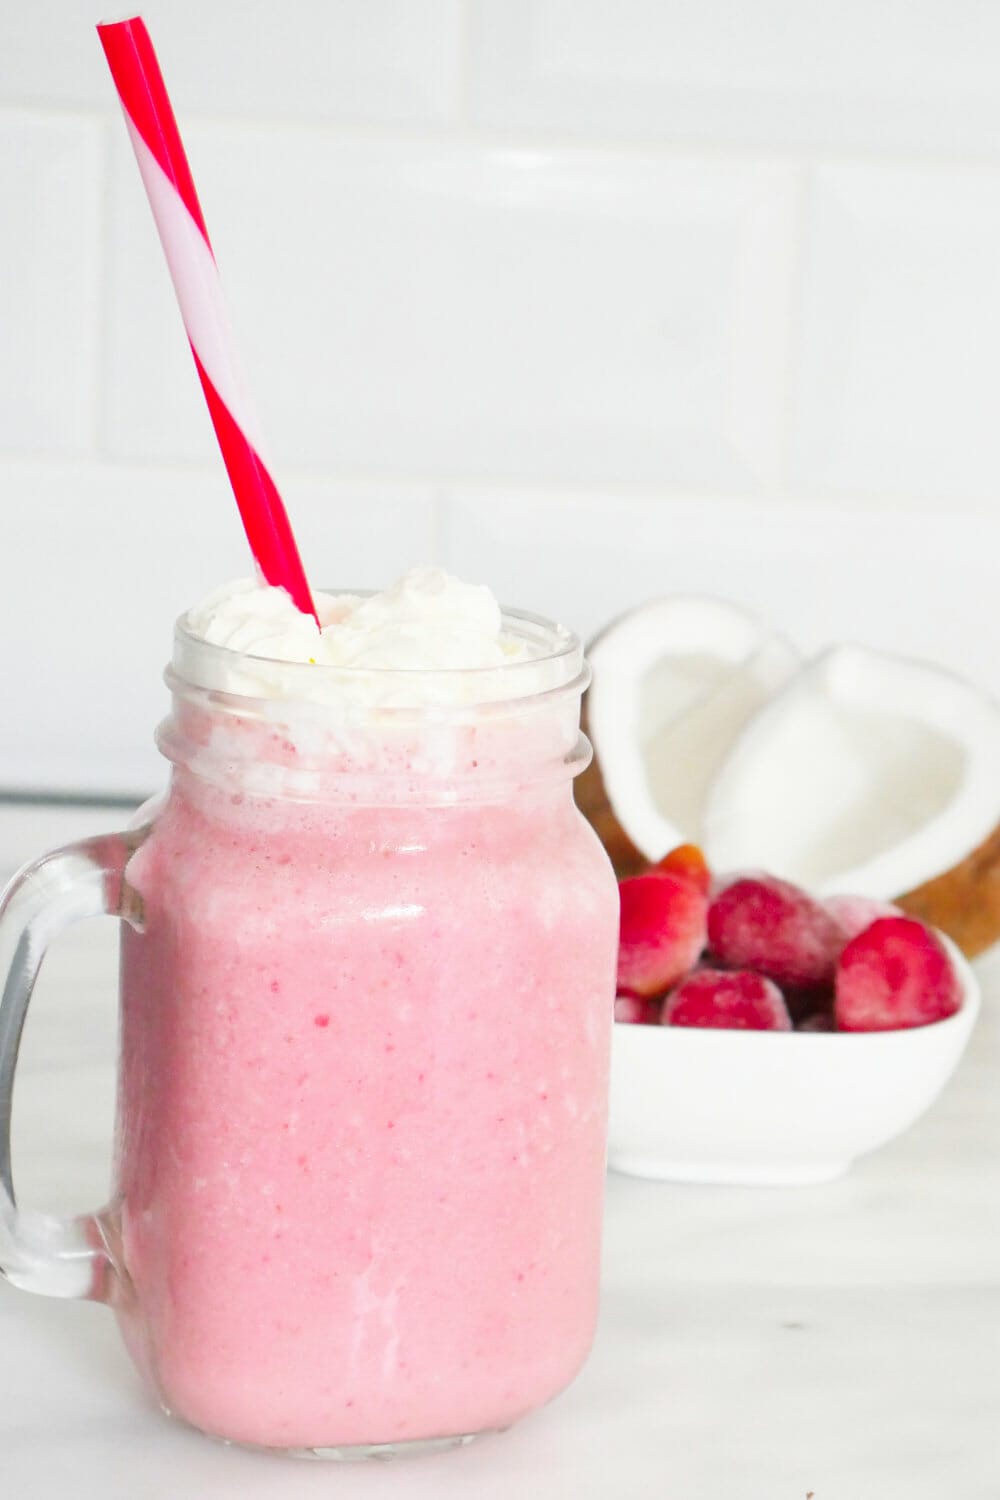 The freshest strawberry coconut milk smoothie recipe (+ tips!) via @thesmoothiesite